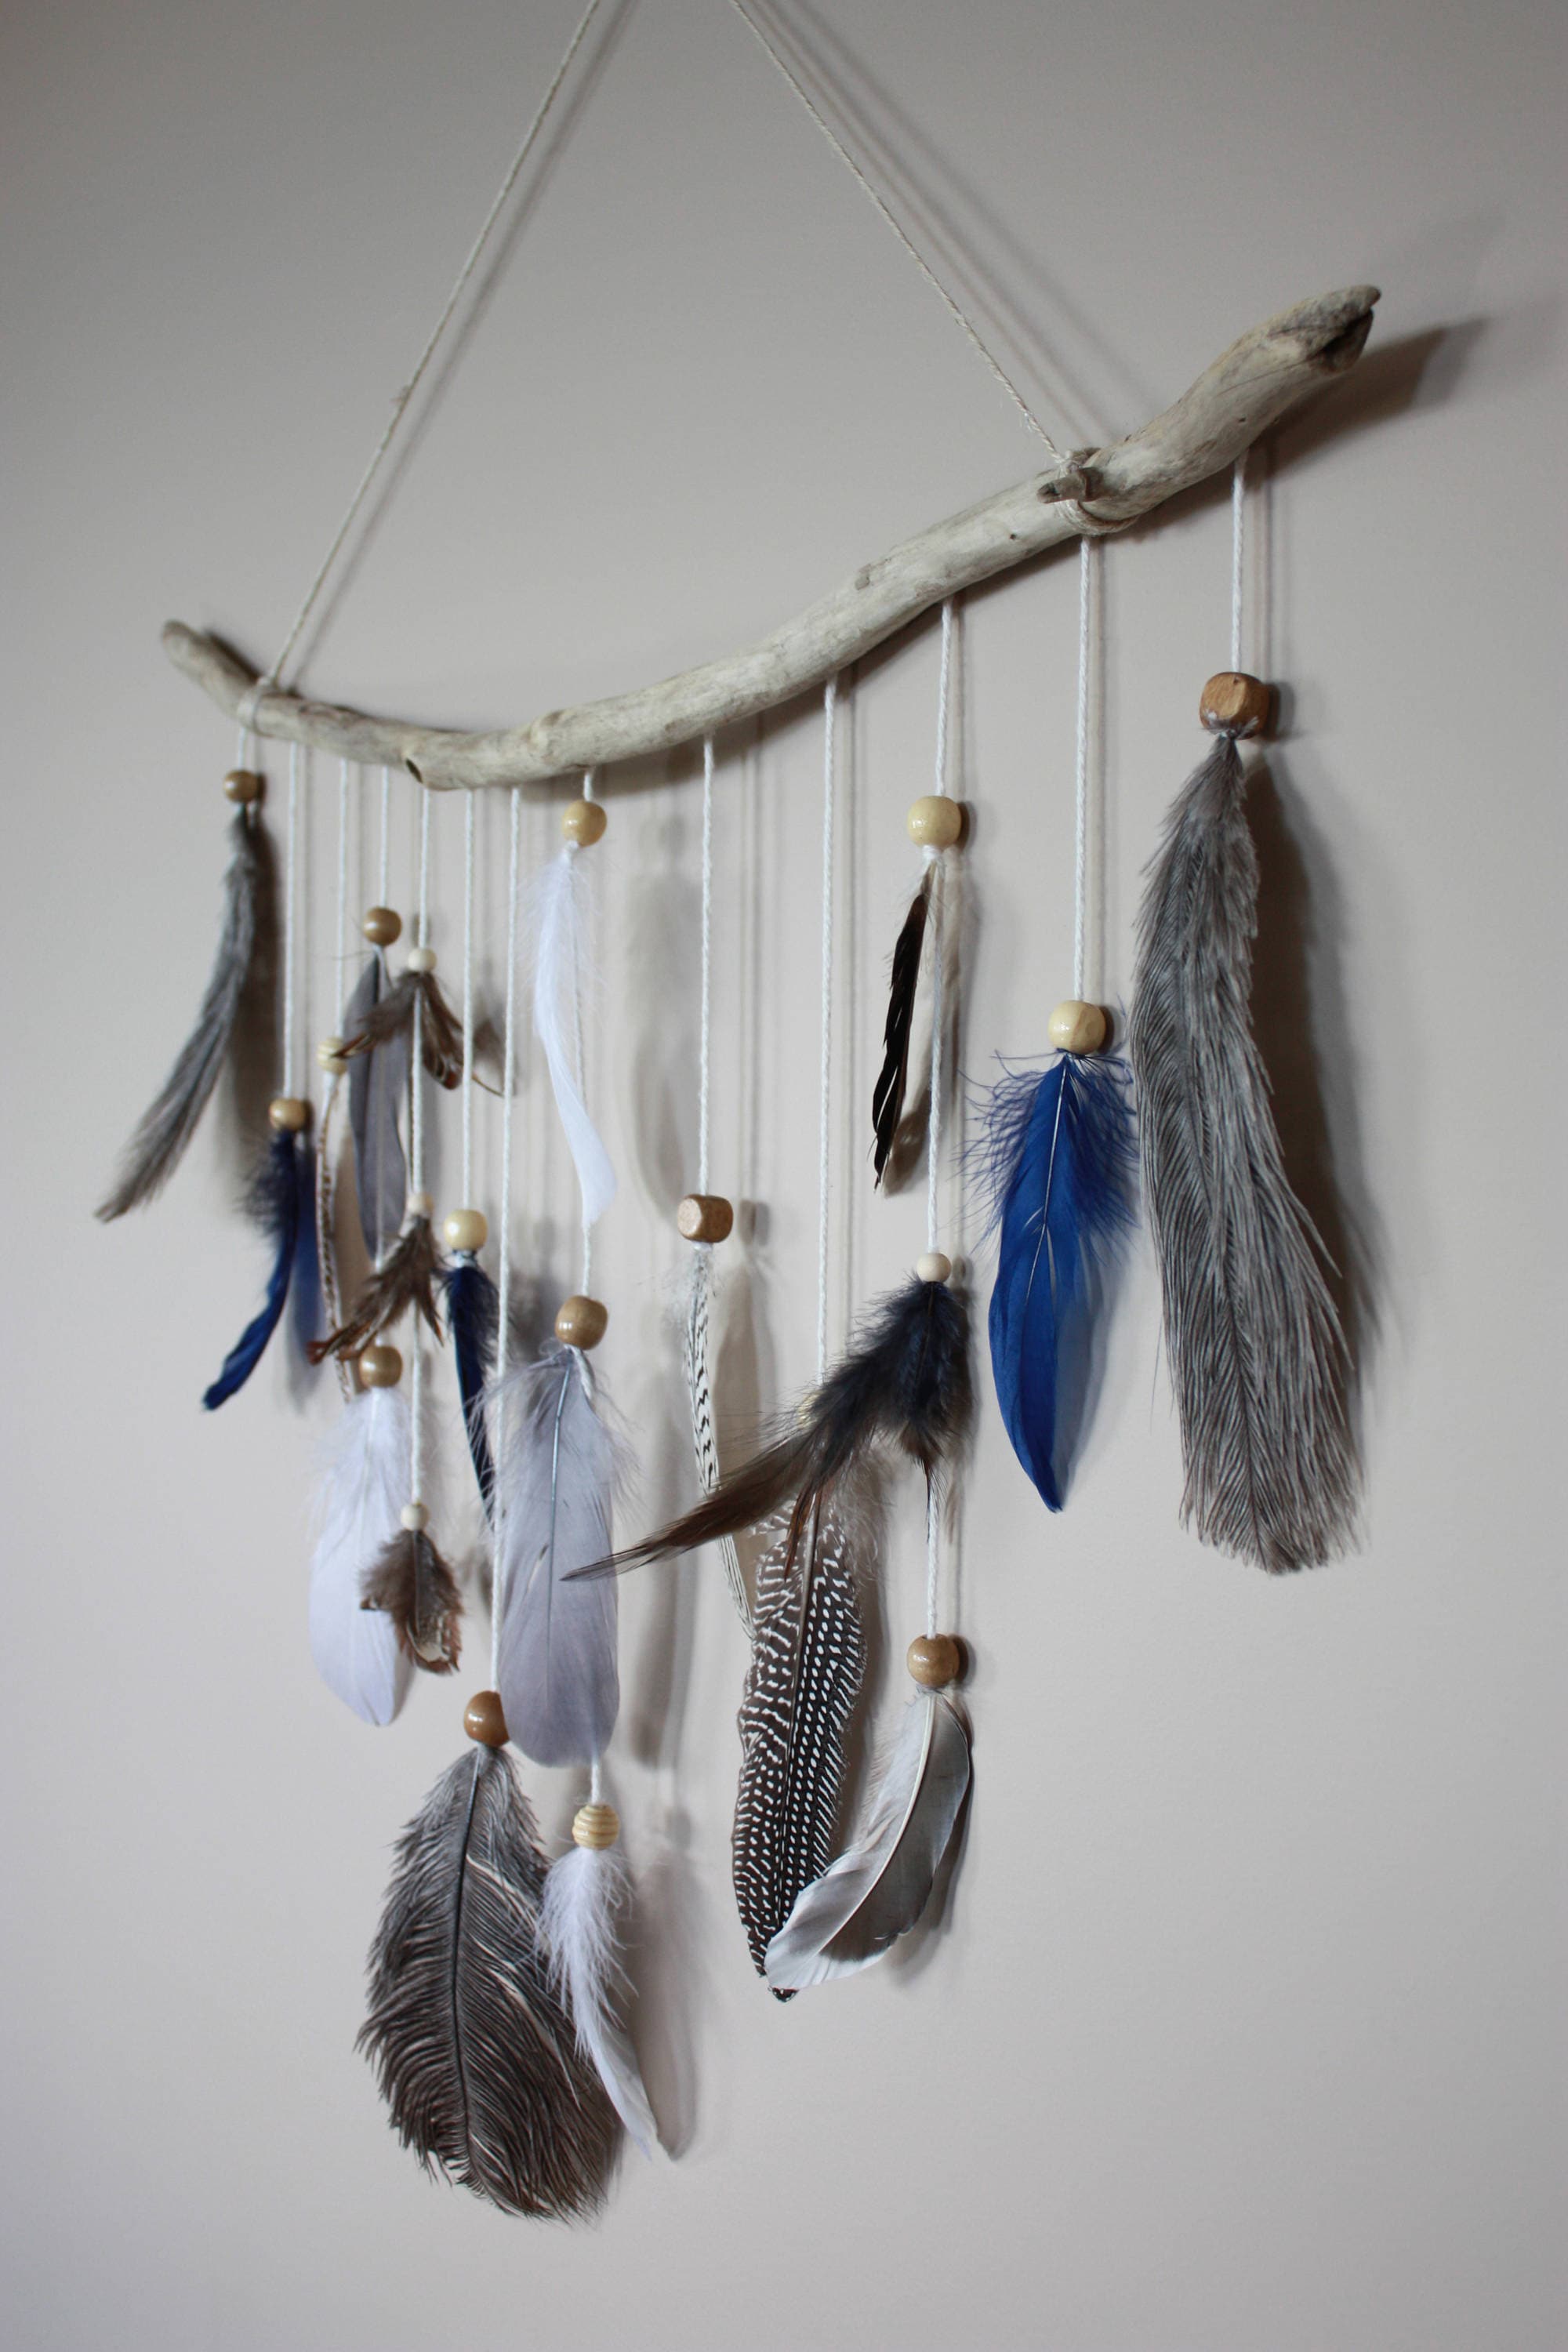  EFLALYHG Bohemian Wall Hanging Decor, Handmade Feather